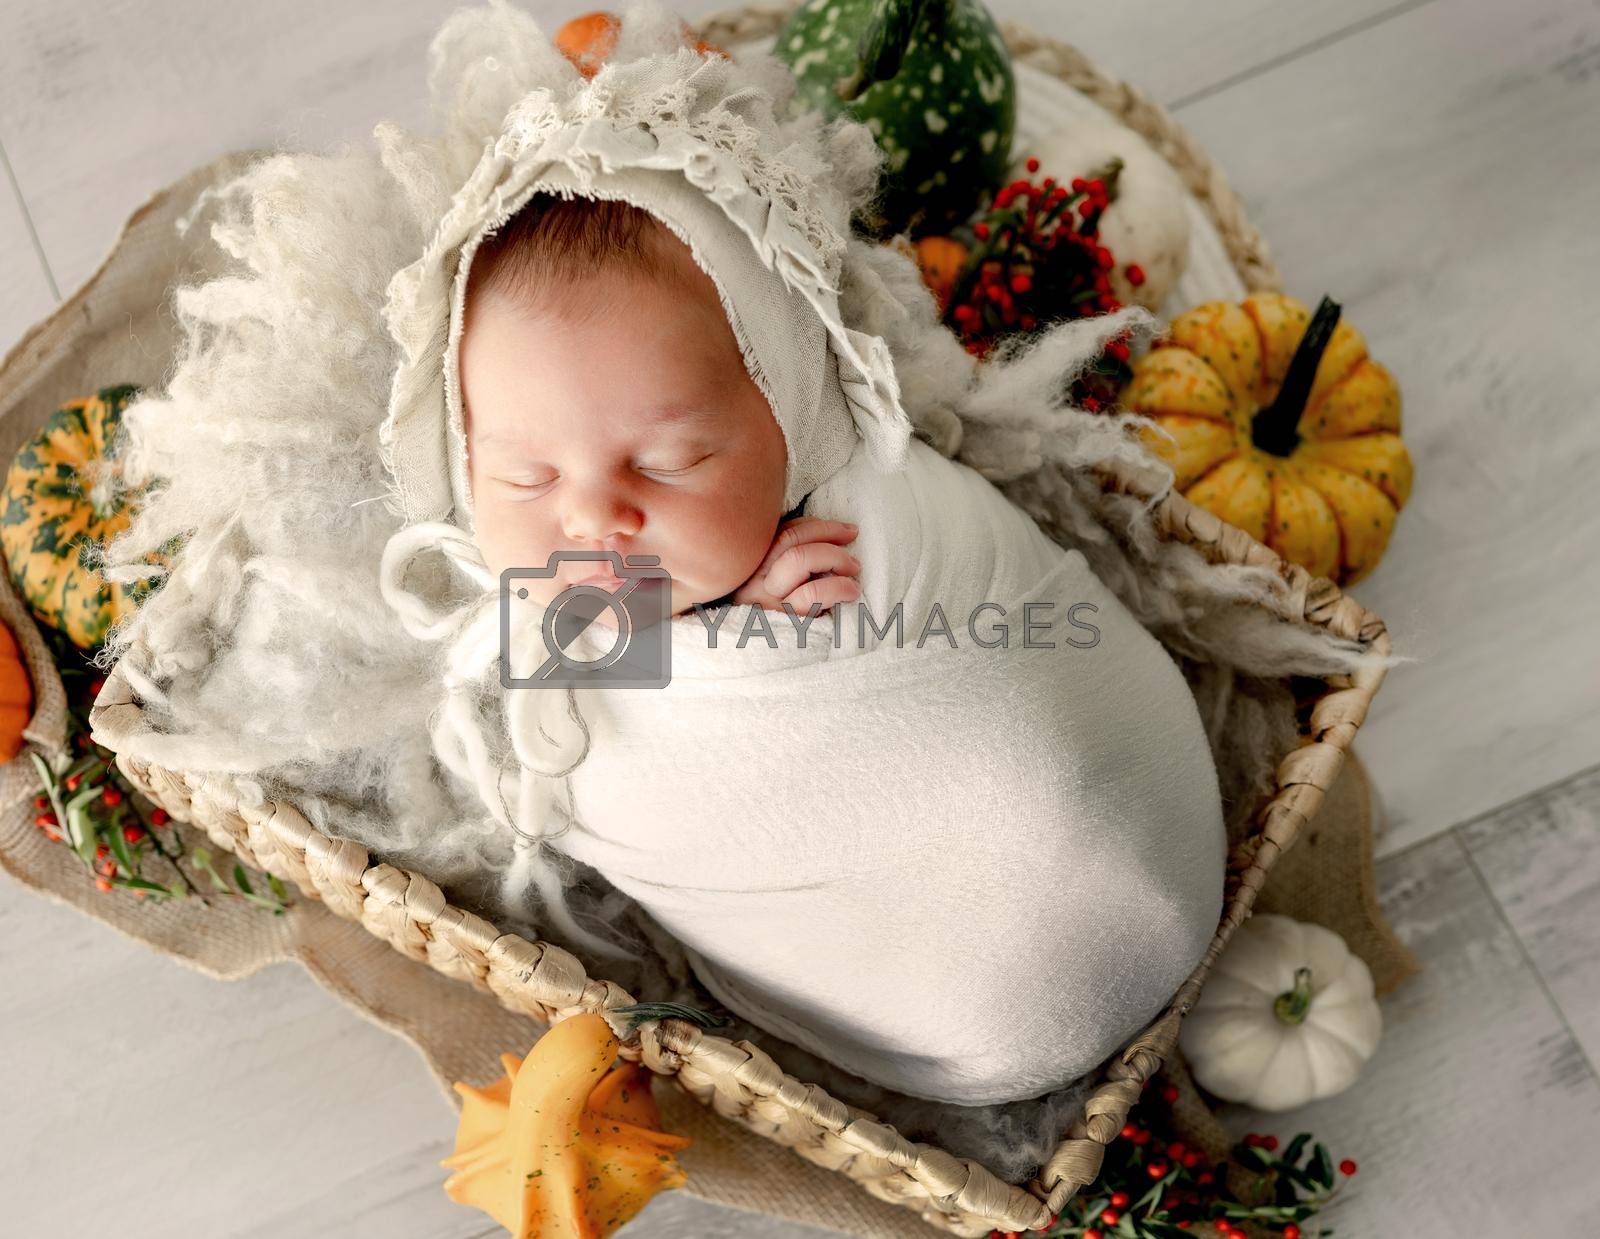 Royalty free image of Newborn baby girl by tan4ikk1